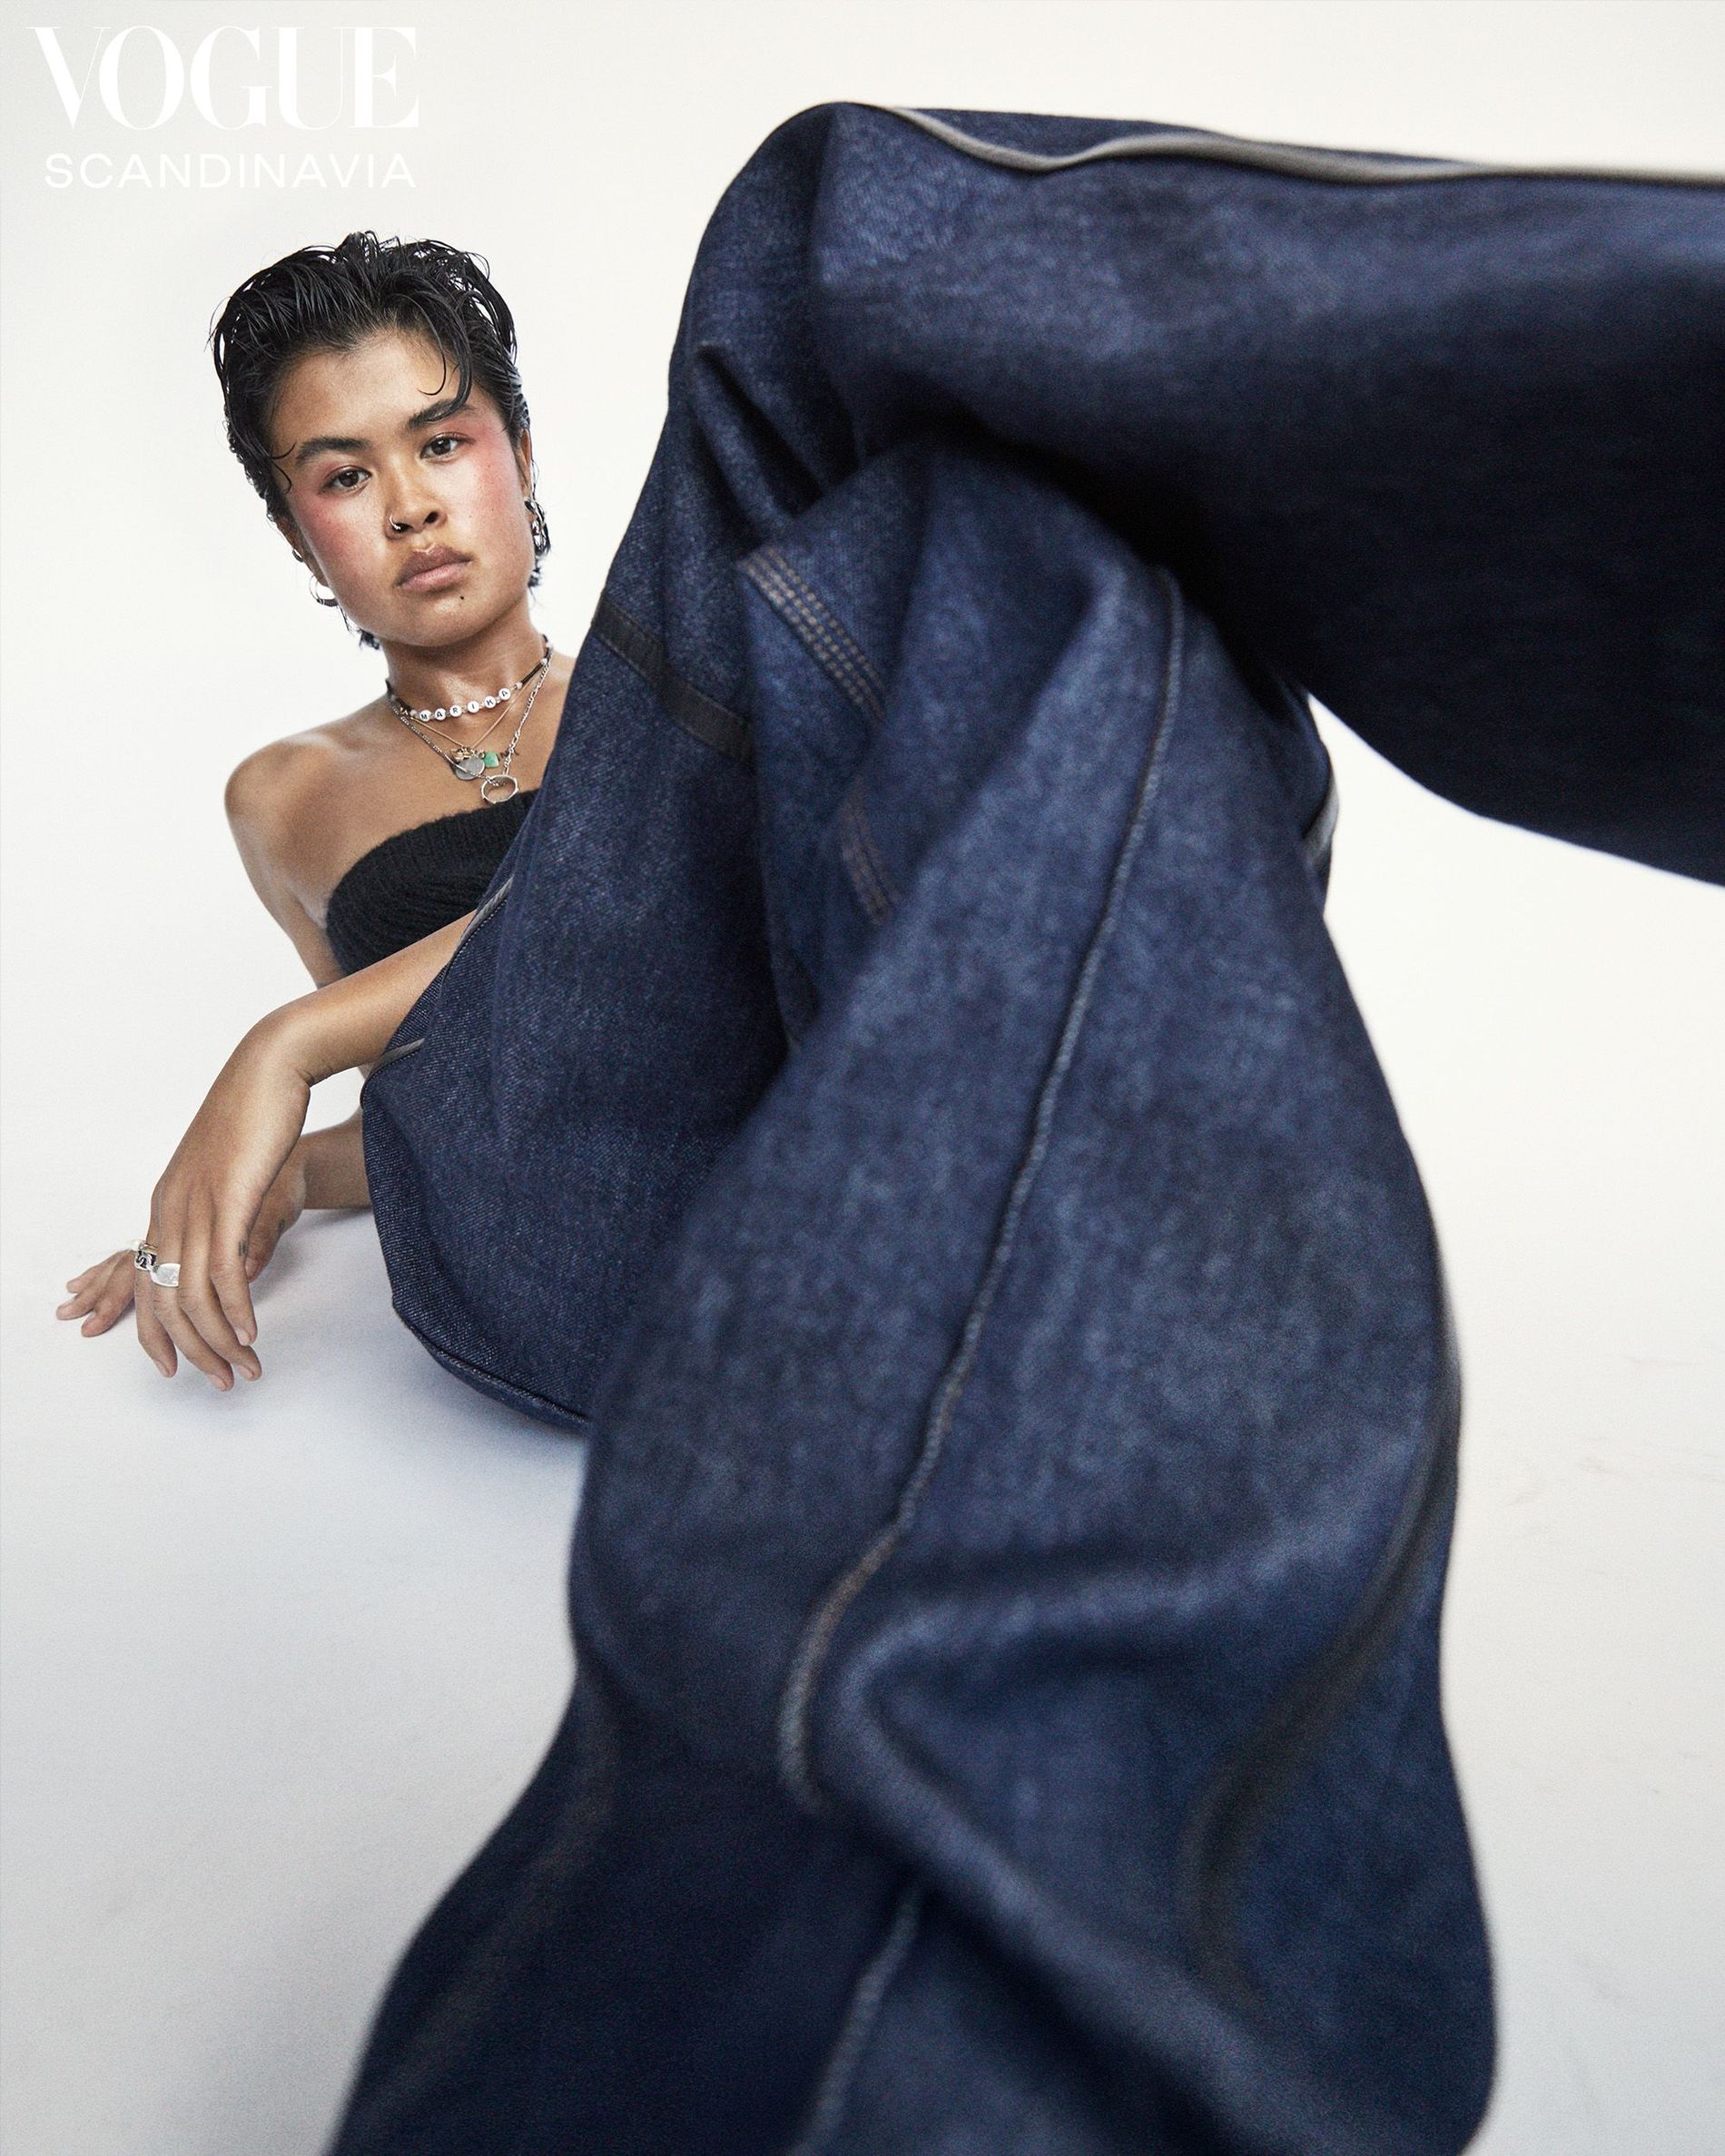 Wide legged denim featured in Vogue Scandinavia's editorial 